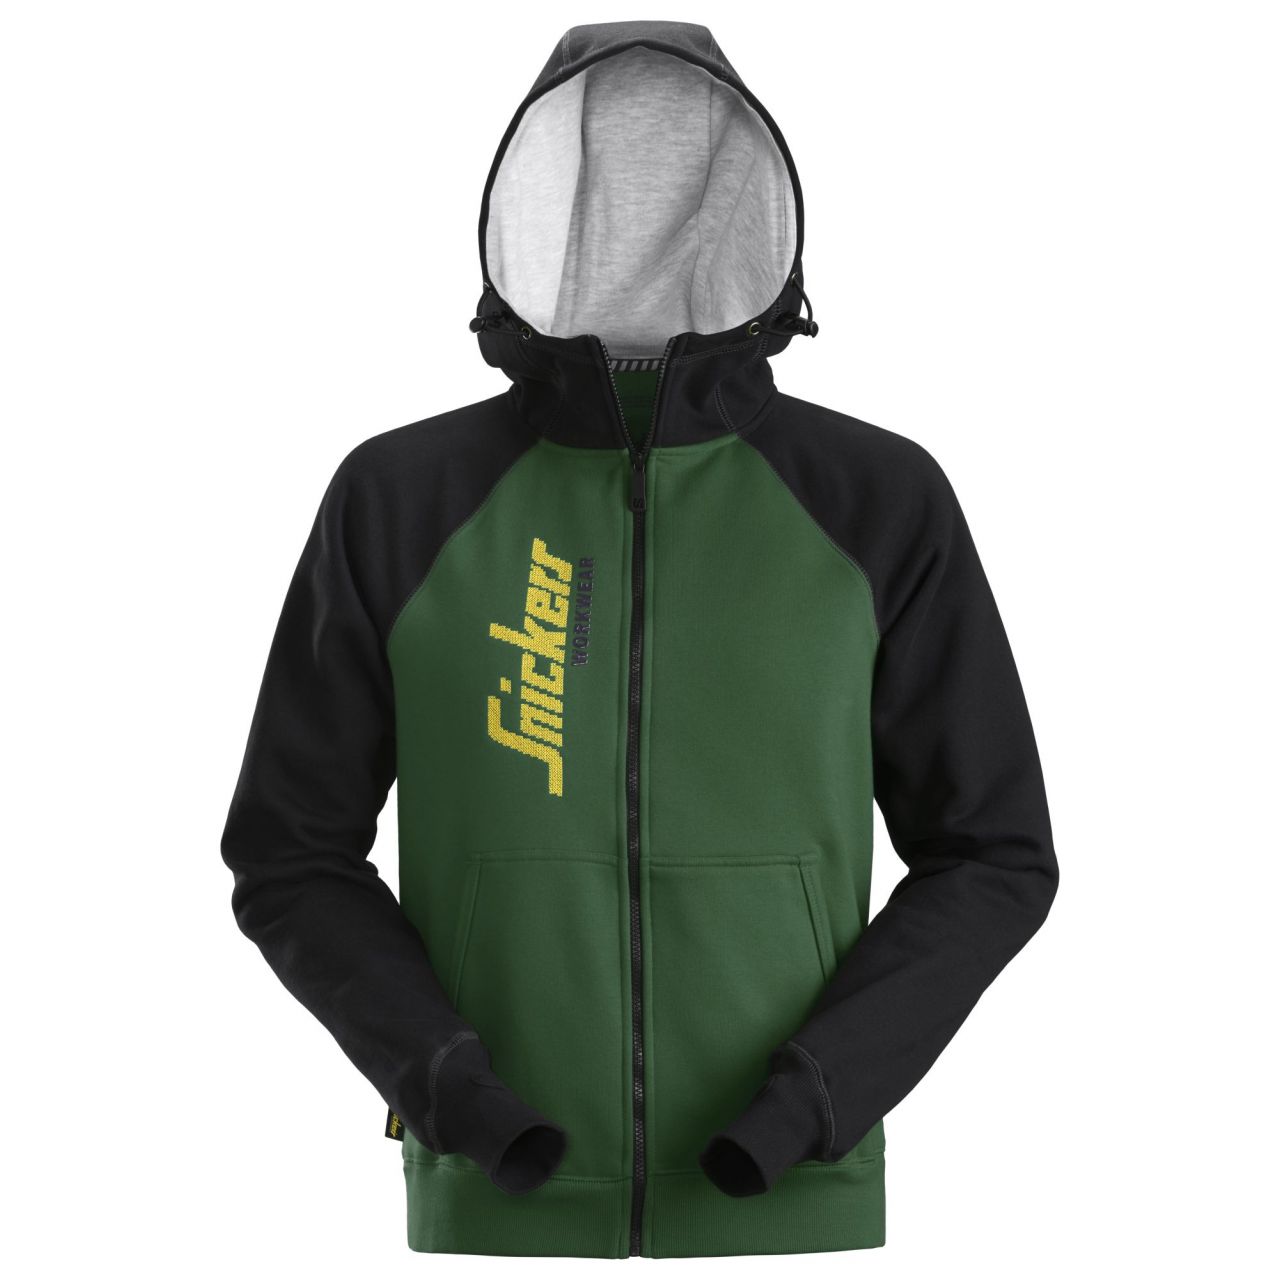 Sudadera con capucha con cremallera completa y logotipo Verde bosque/Negra talla S